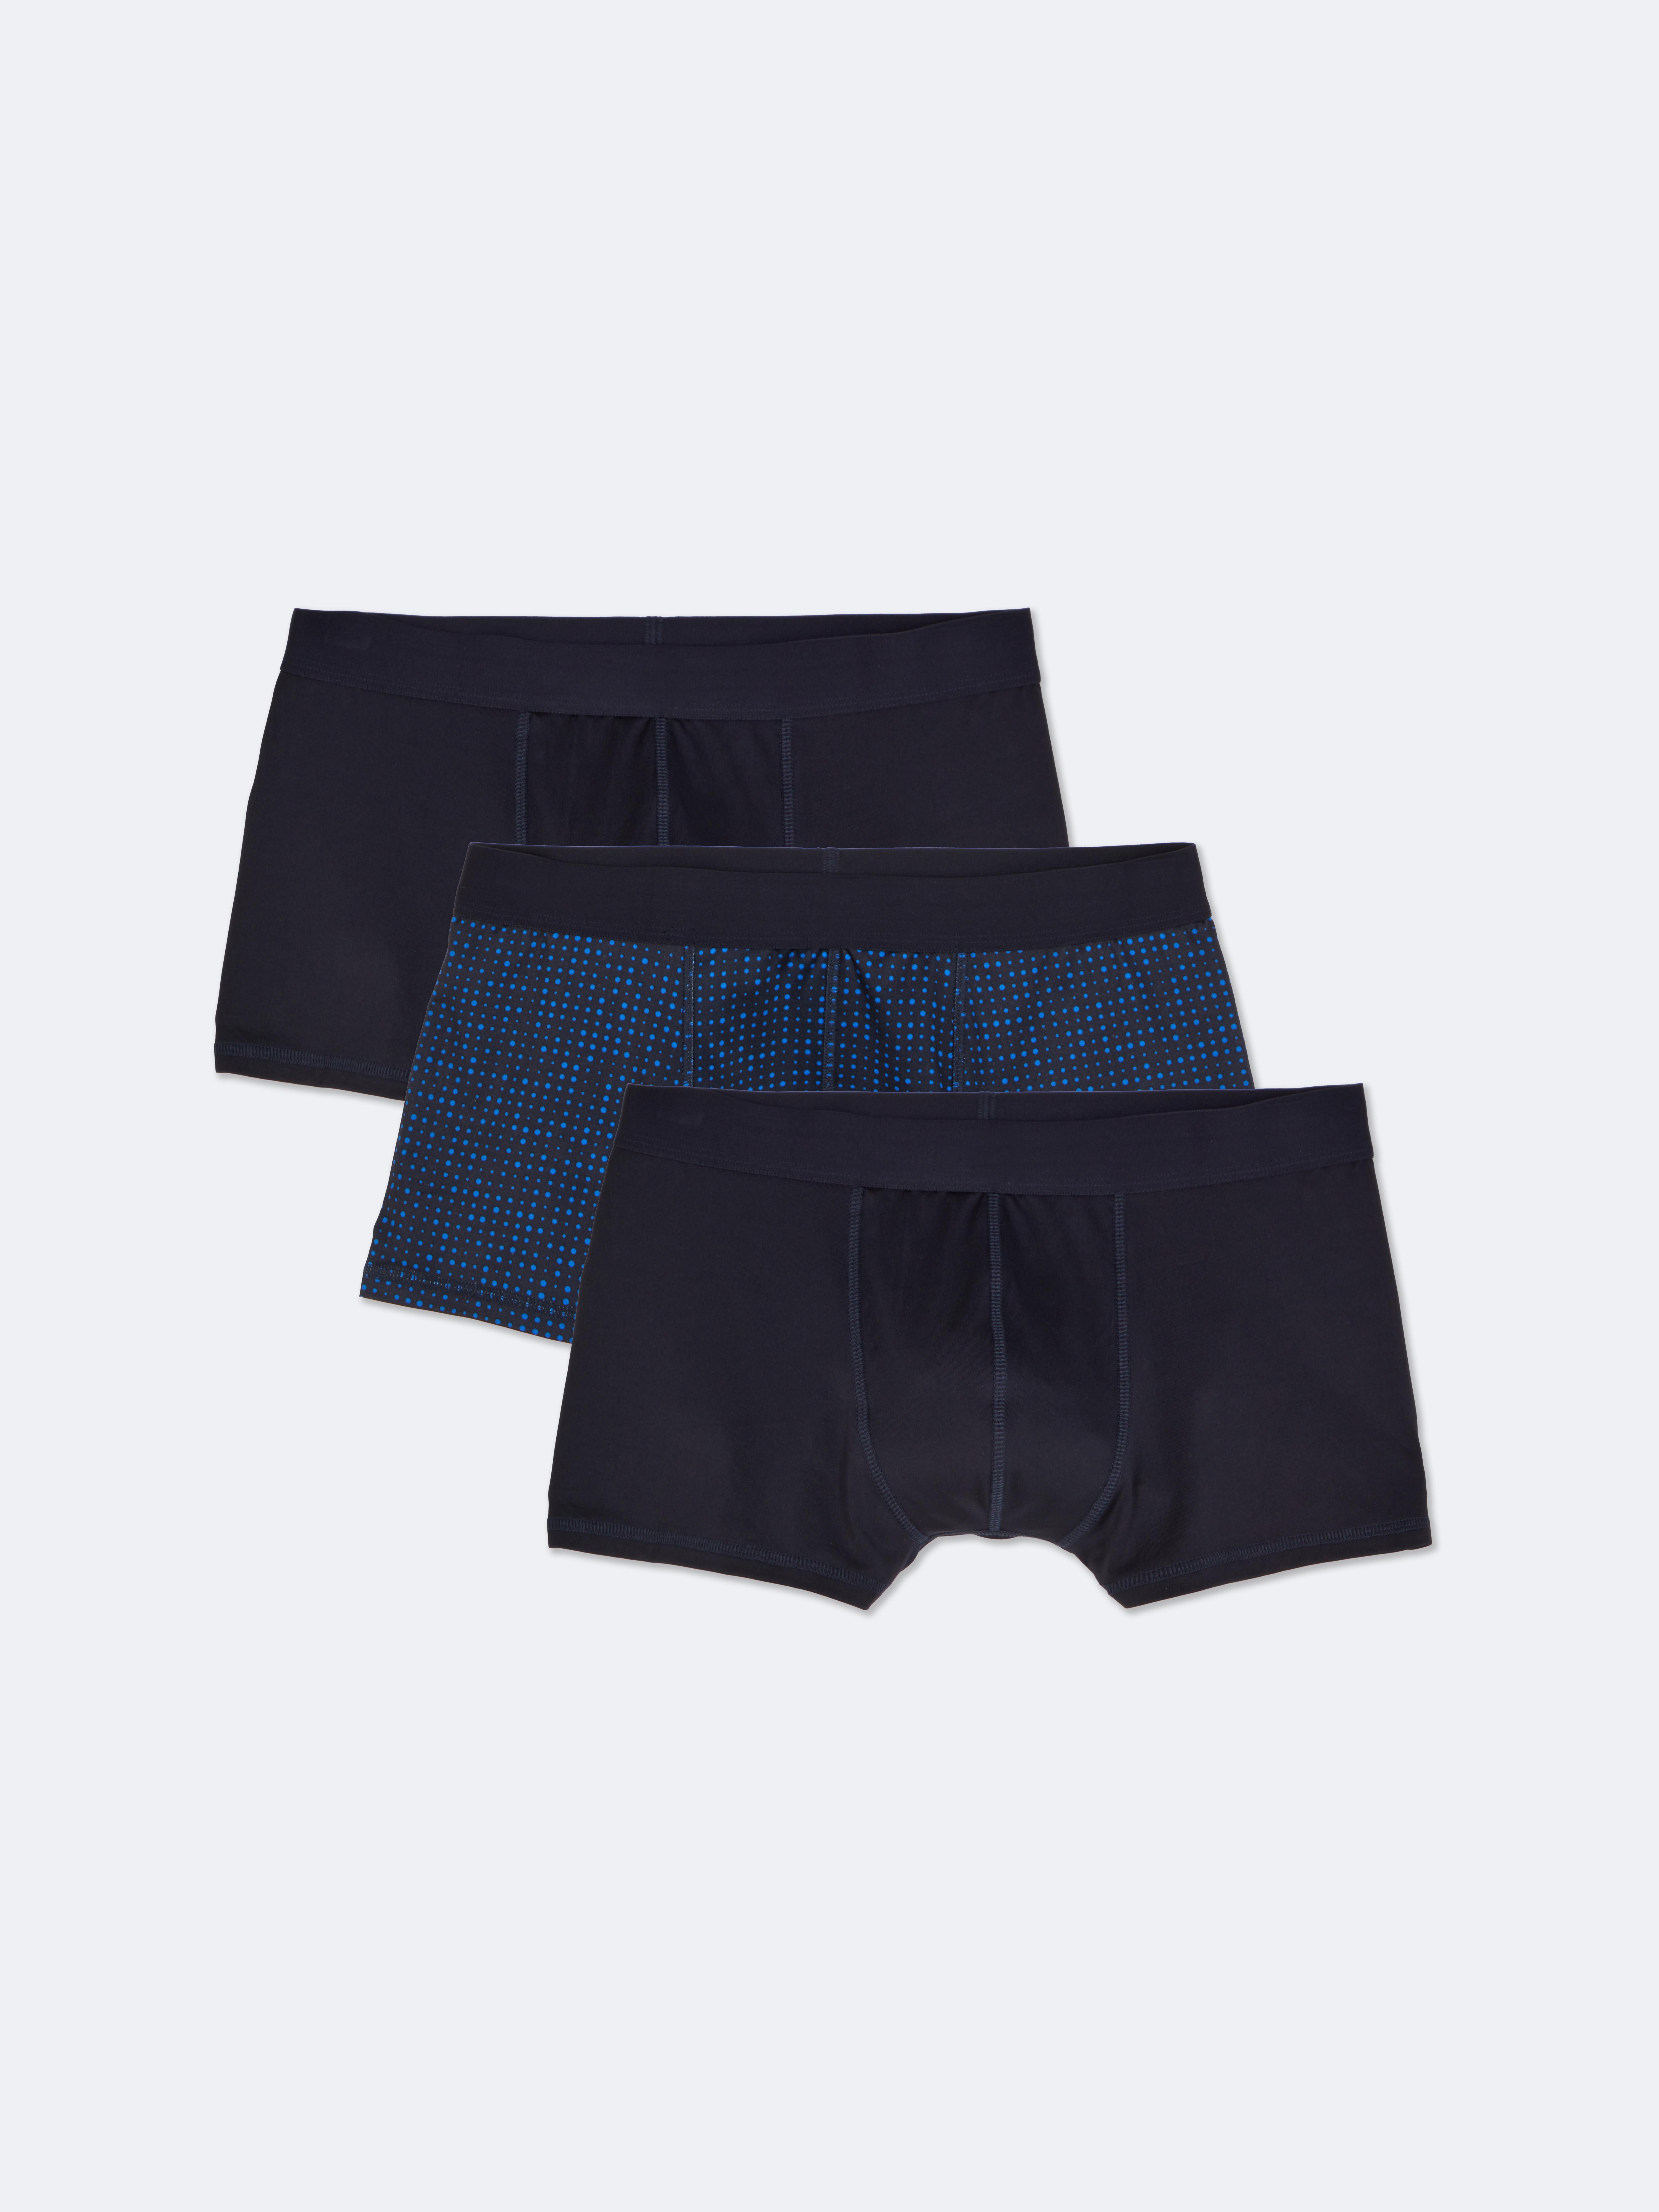 Batman Mens Black & Gray Character Underwear Boxers Boxer Shorts